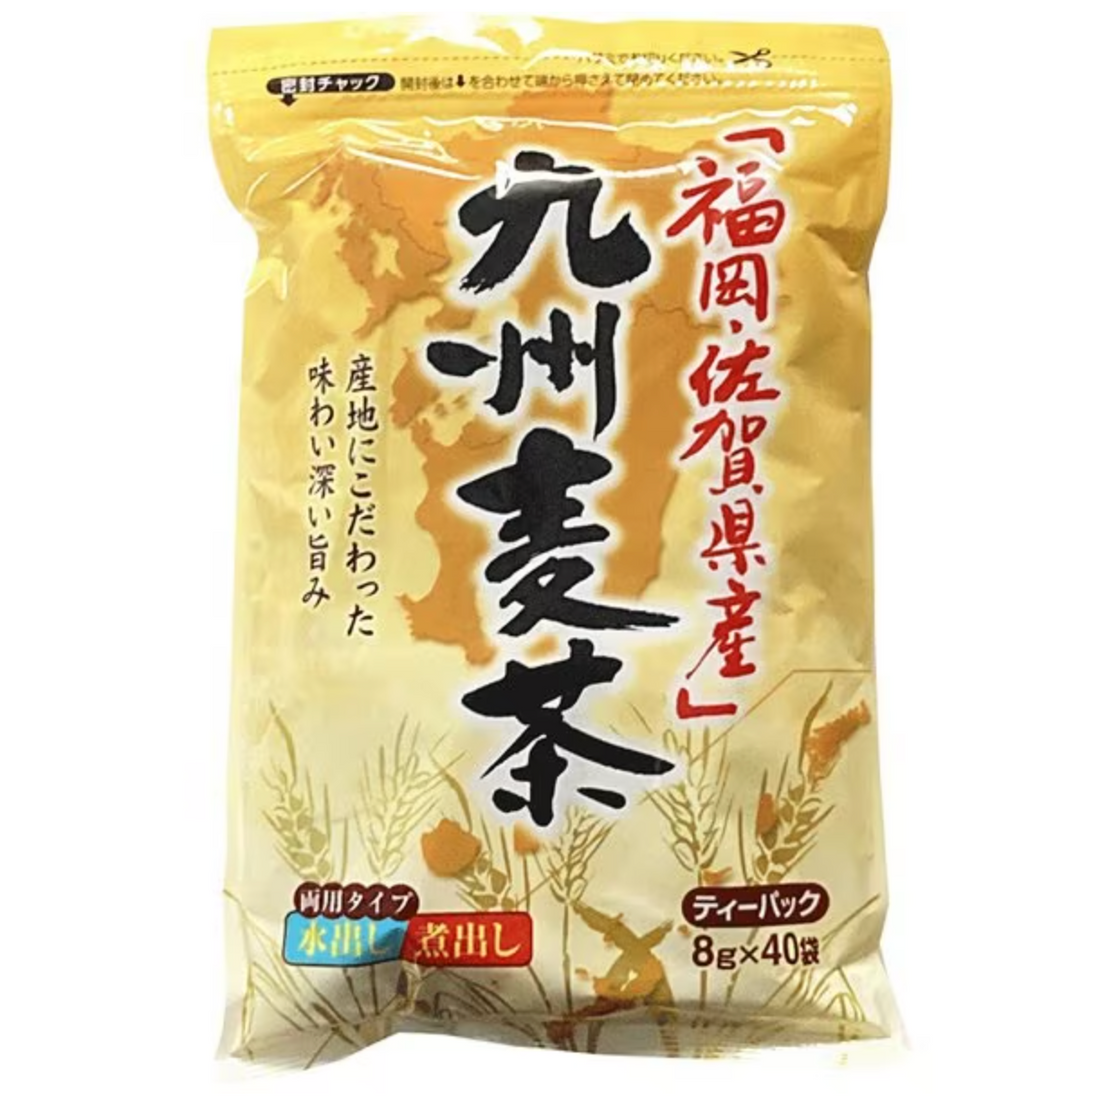 Chikiriya Fukuoka /Saga prefecture Kyushu barley tea tea pack 8g x 40